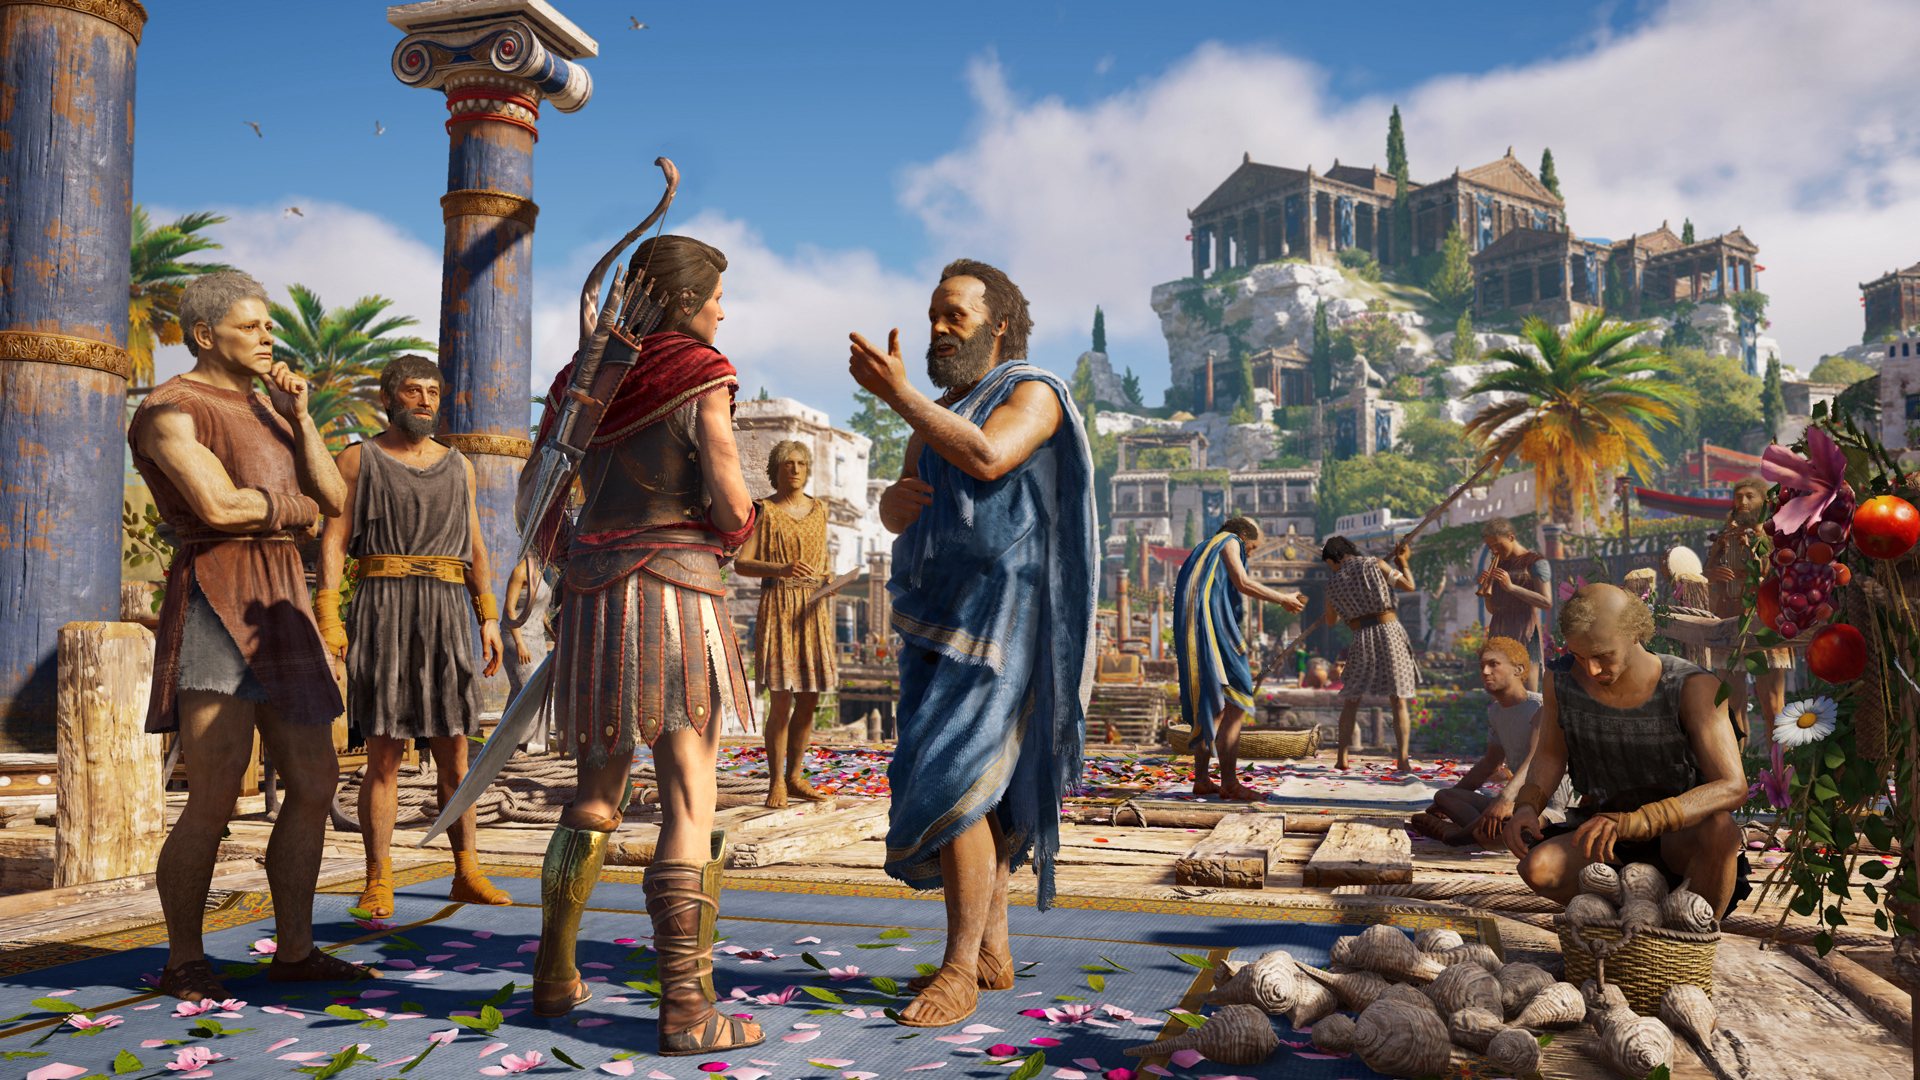 Assassin's Creed Odyssey EU Steam Altergift